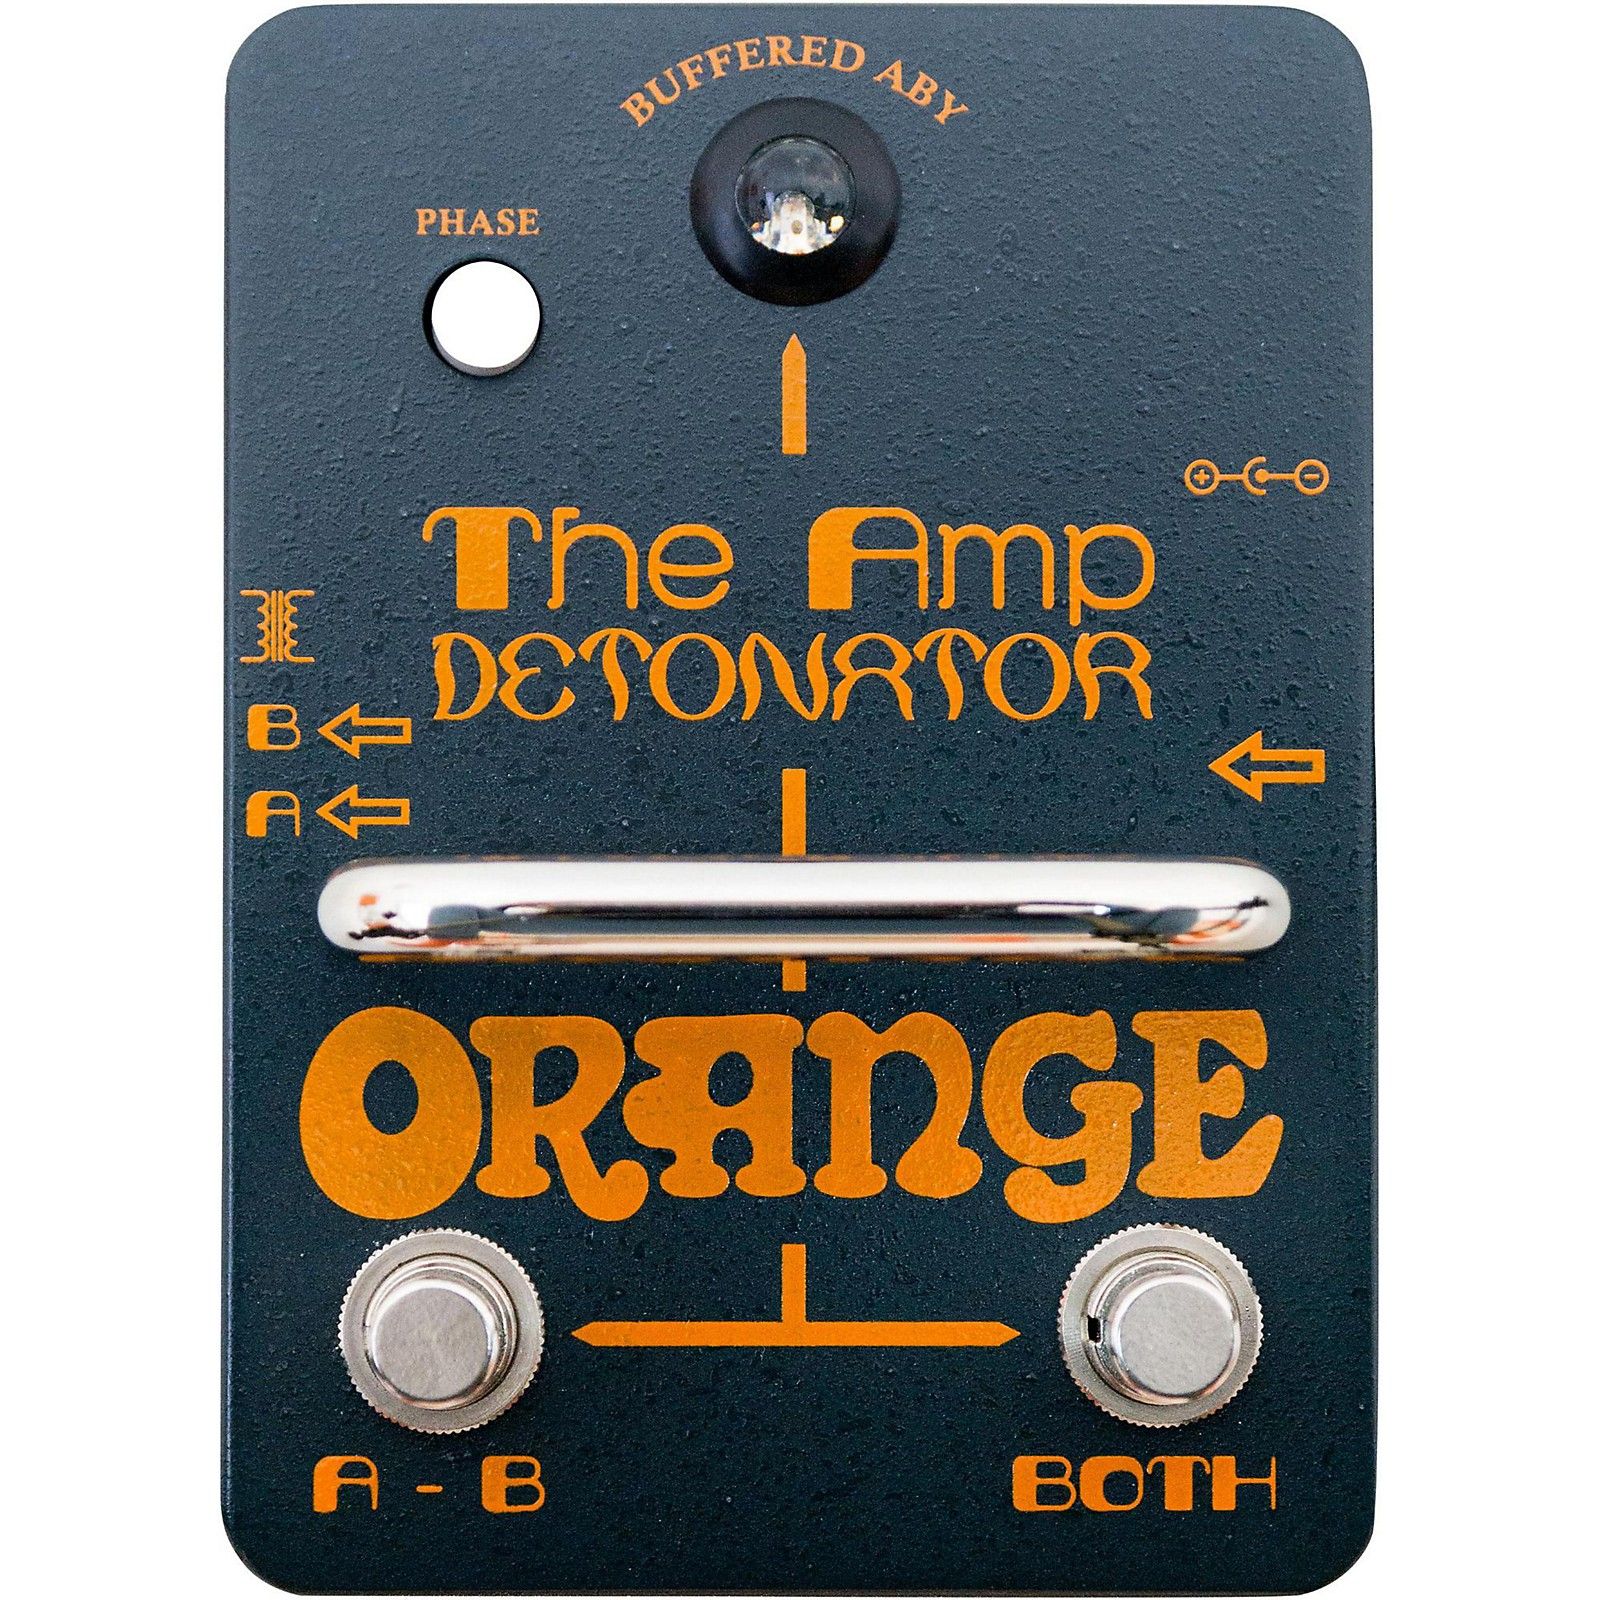  Orange Detonator AB-Y switcher pedal 